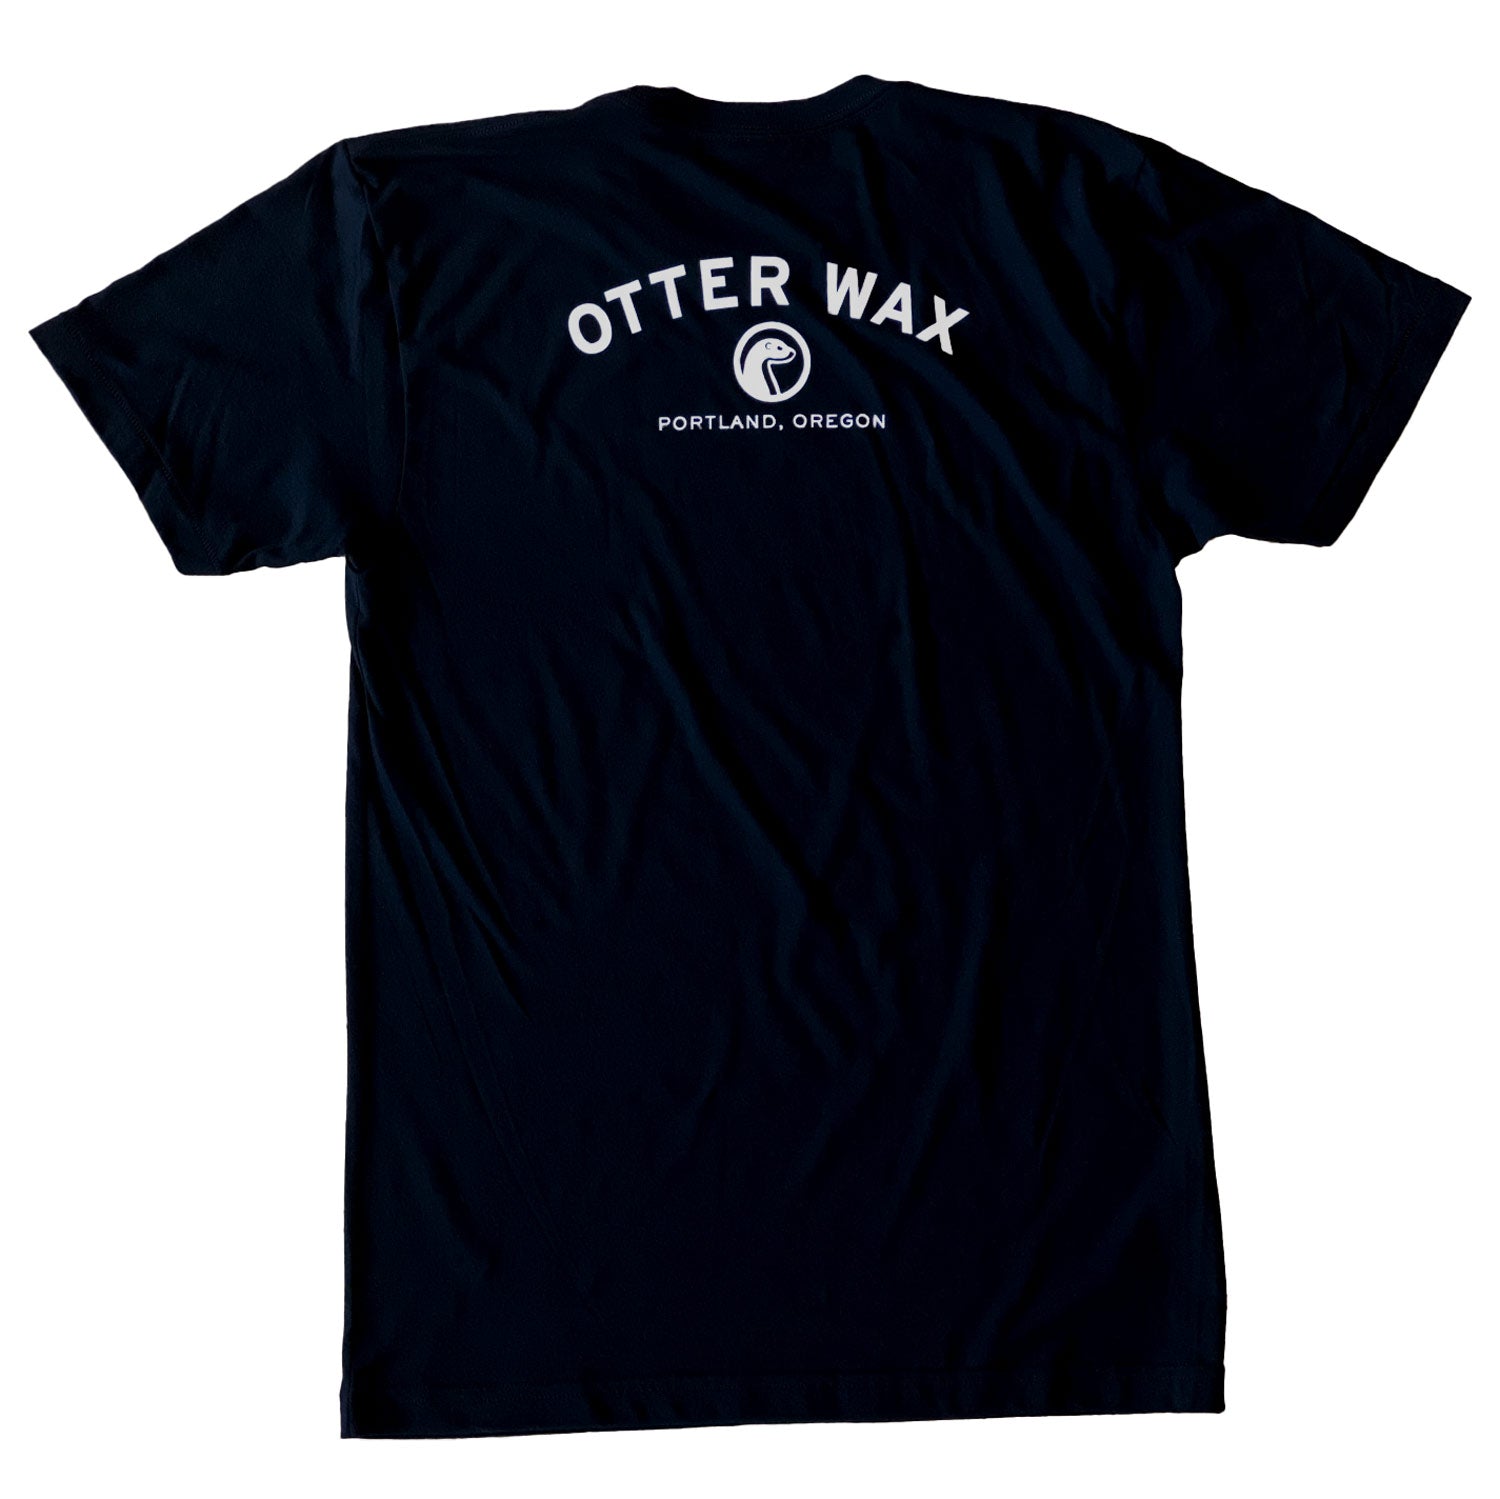 OTTER WAX Fabric Wax Bar — Philistine